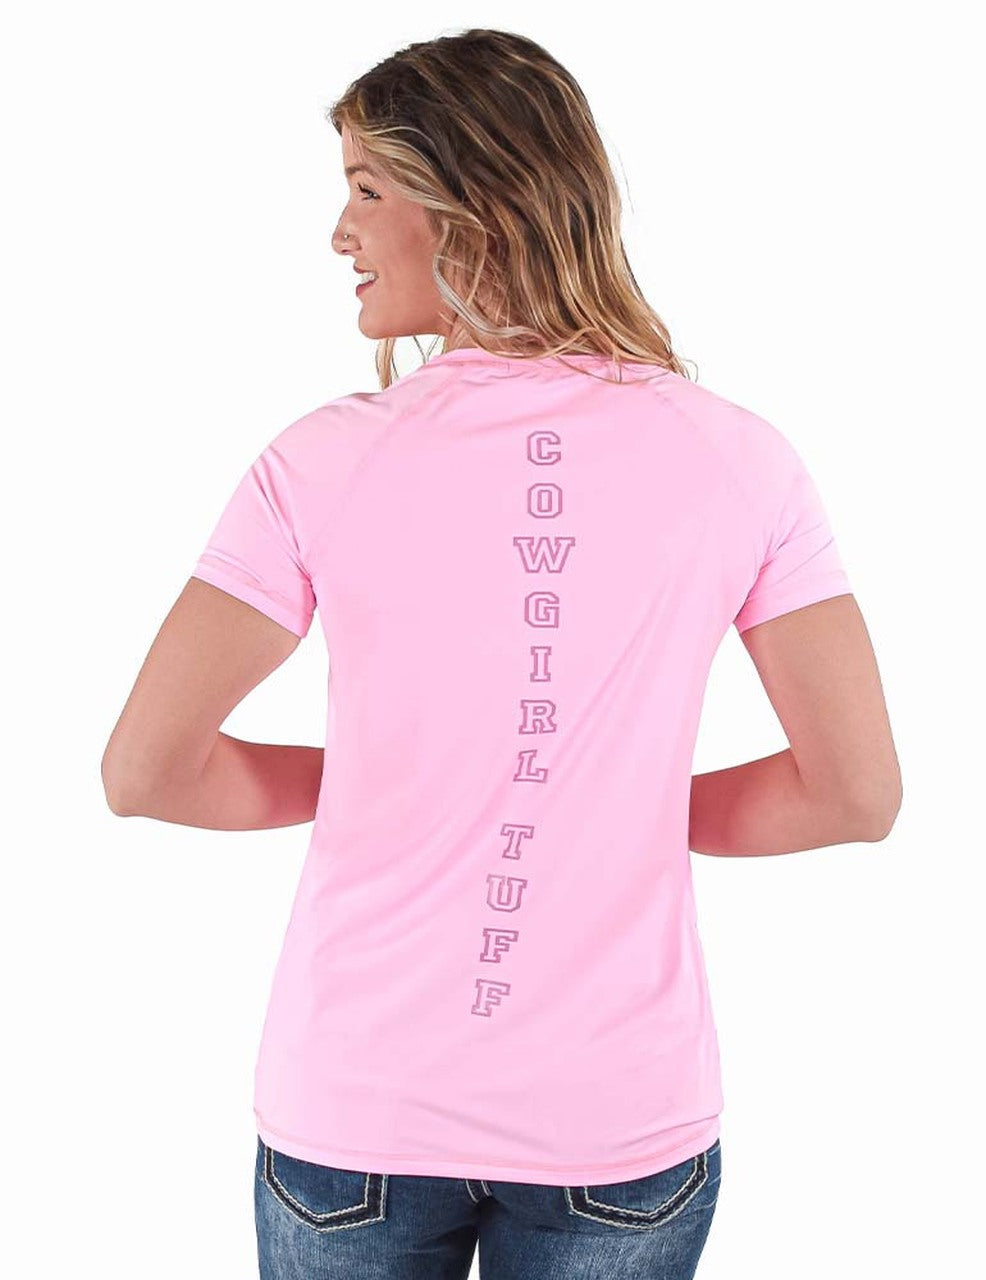 COWGIRL TUFF Women's Bubblegum Pink Breathe Instant Cooling UPF Short Sleeve Raglan/Baseball Tee